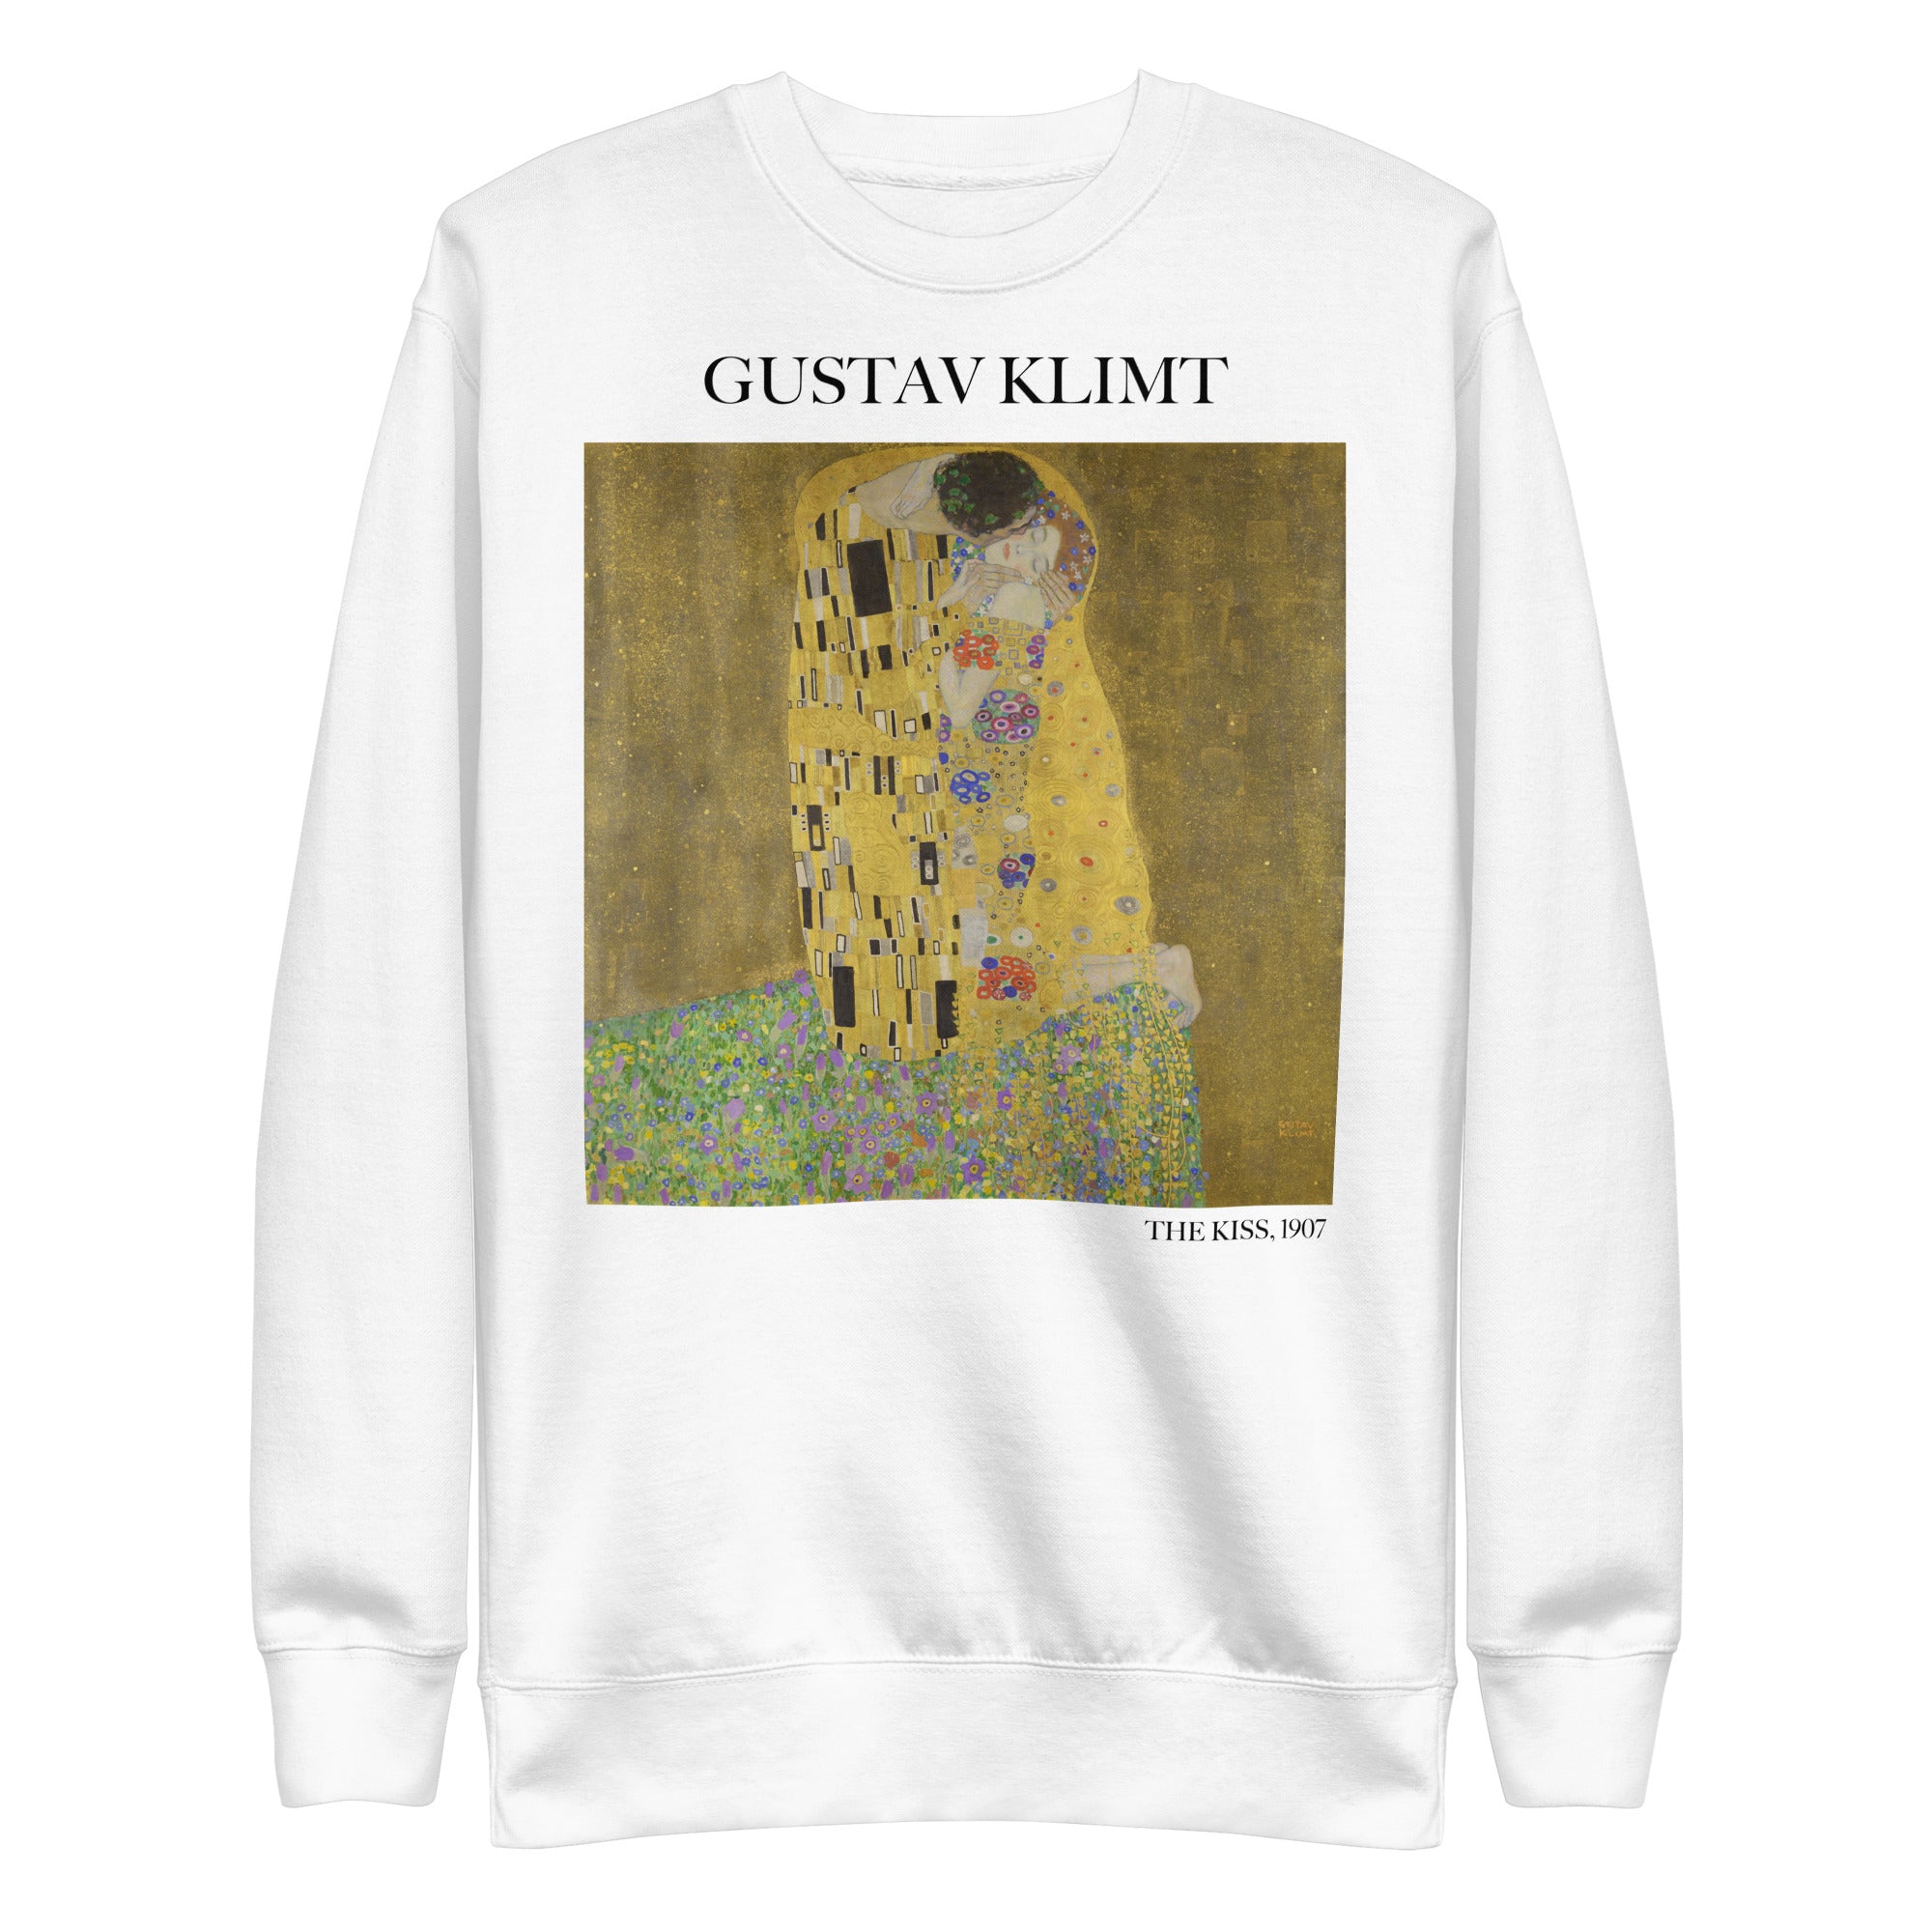 Gustav Klimt 'The Kiss' Famous Painting Sweatshirt | Unisex Premium Sweatshirt